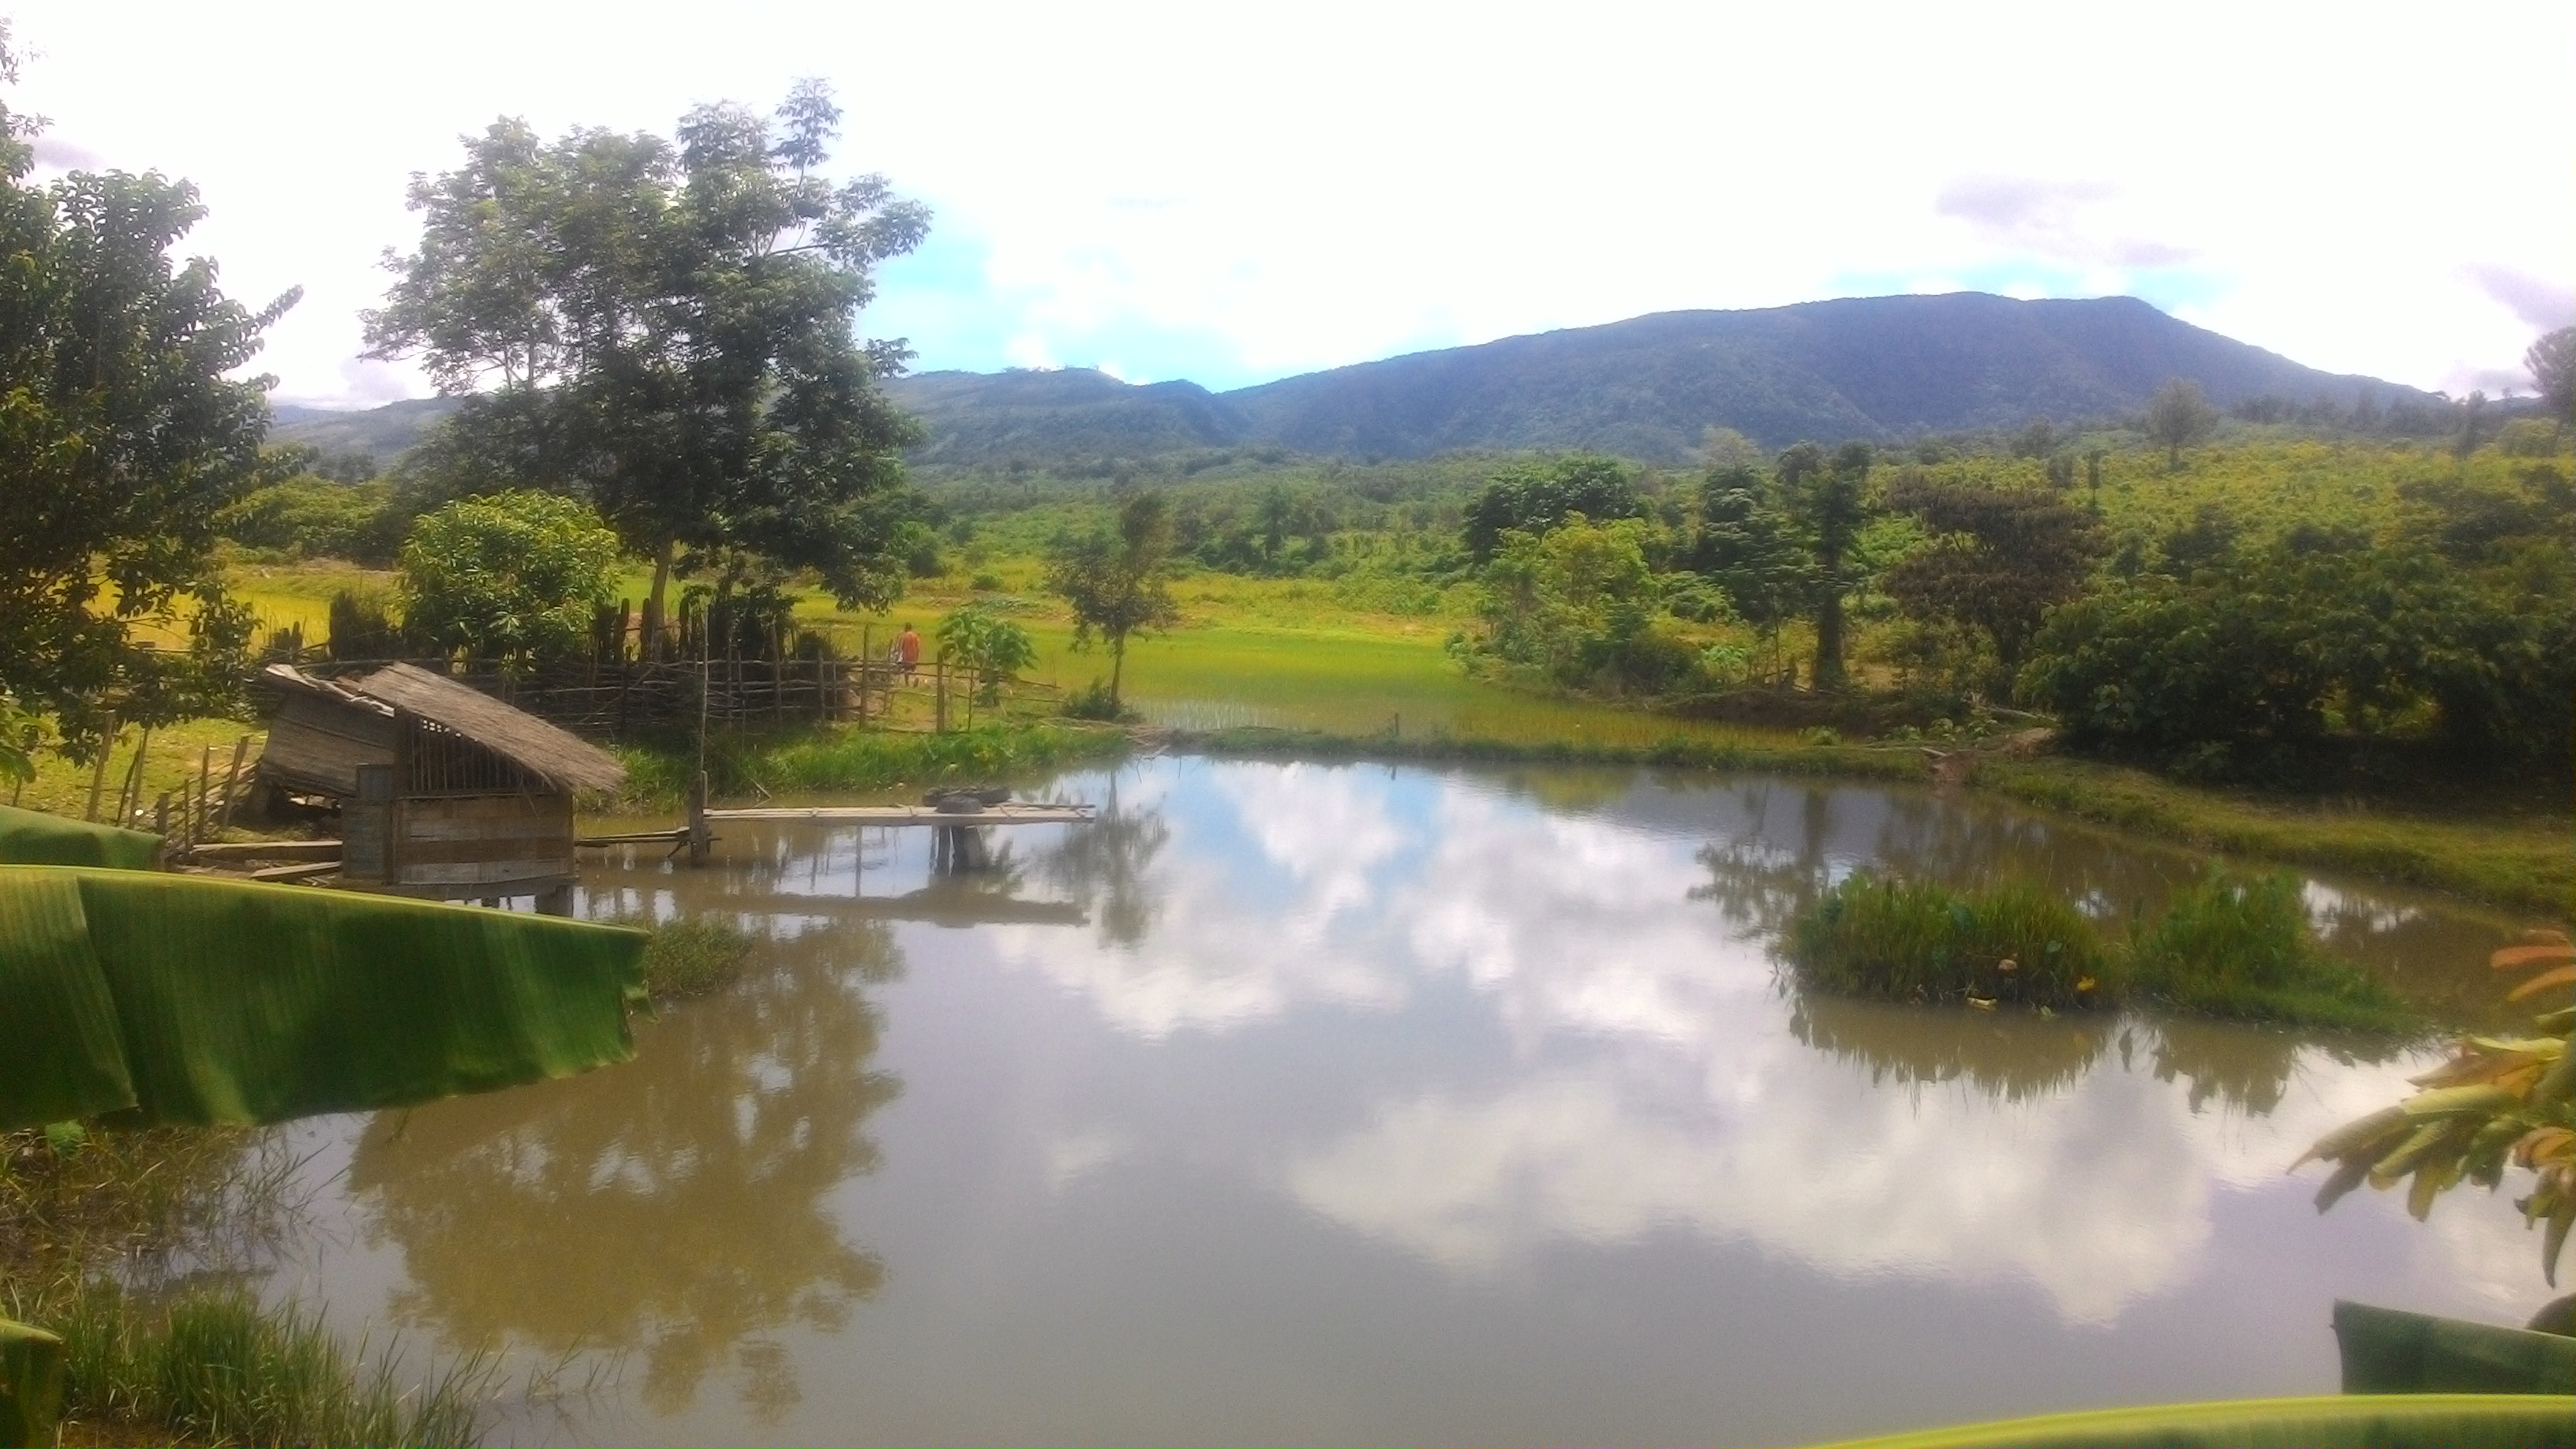 Fish pond adjacent to paddy rice field